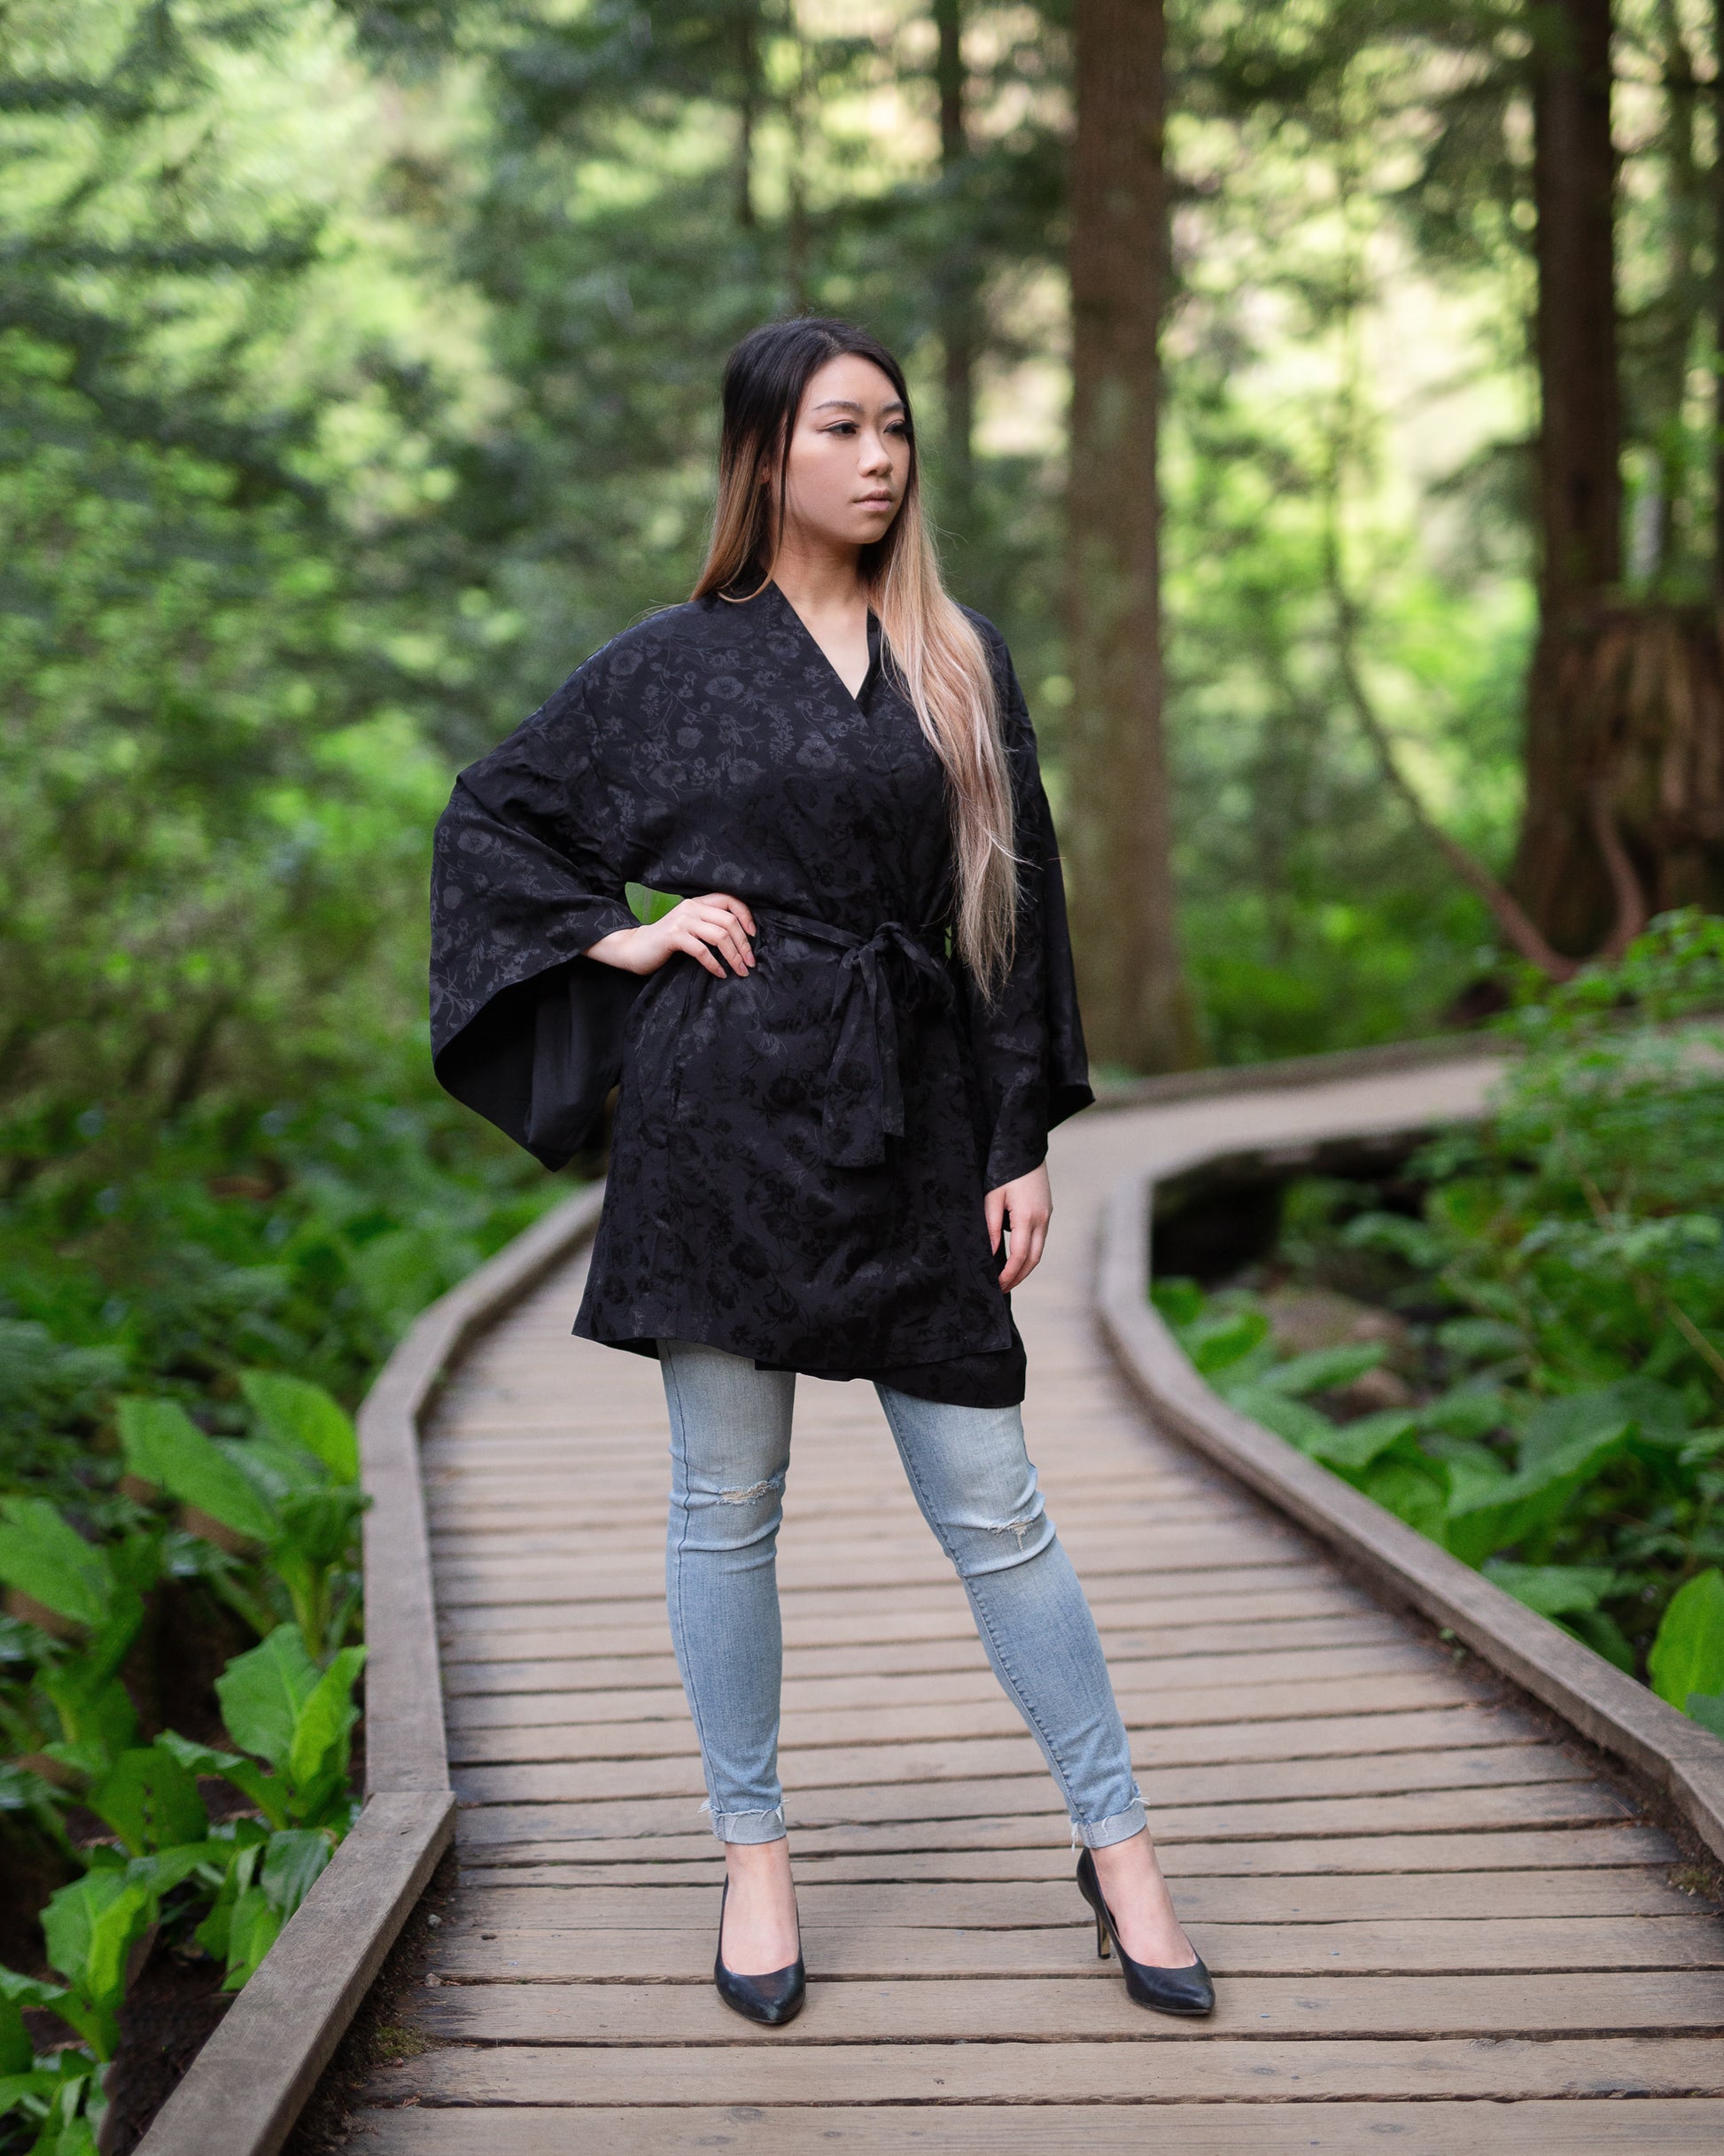 Women's Black Kimono Jacket robe, gifts for her, The Kimono Store Canada, Shop T.K.S